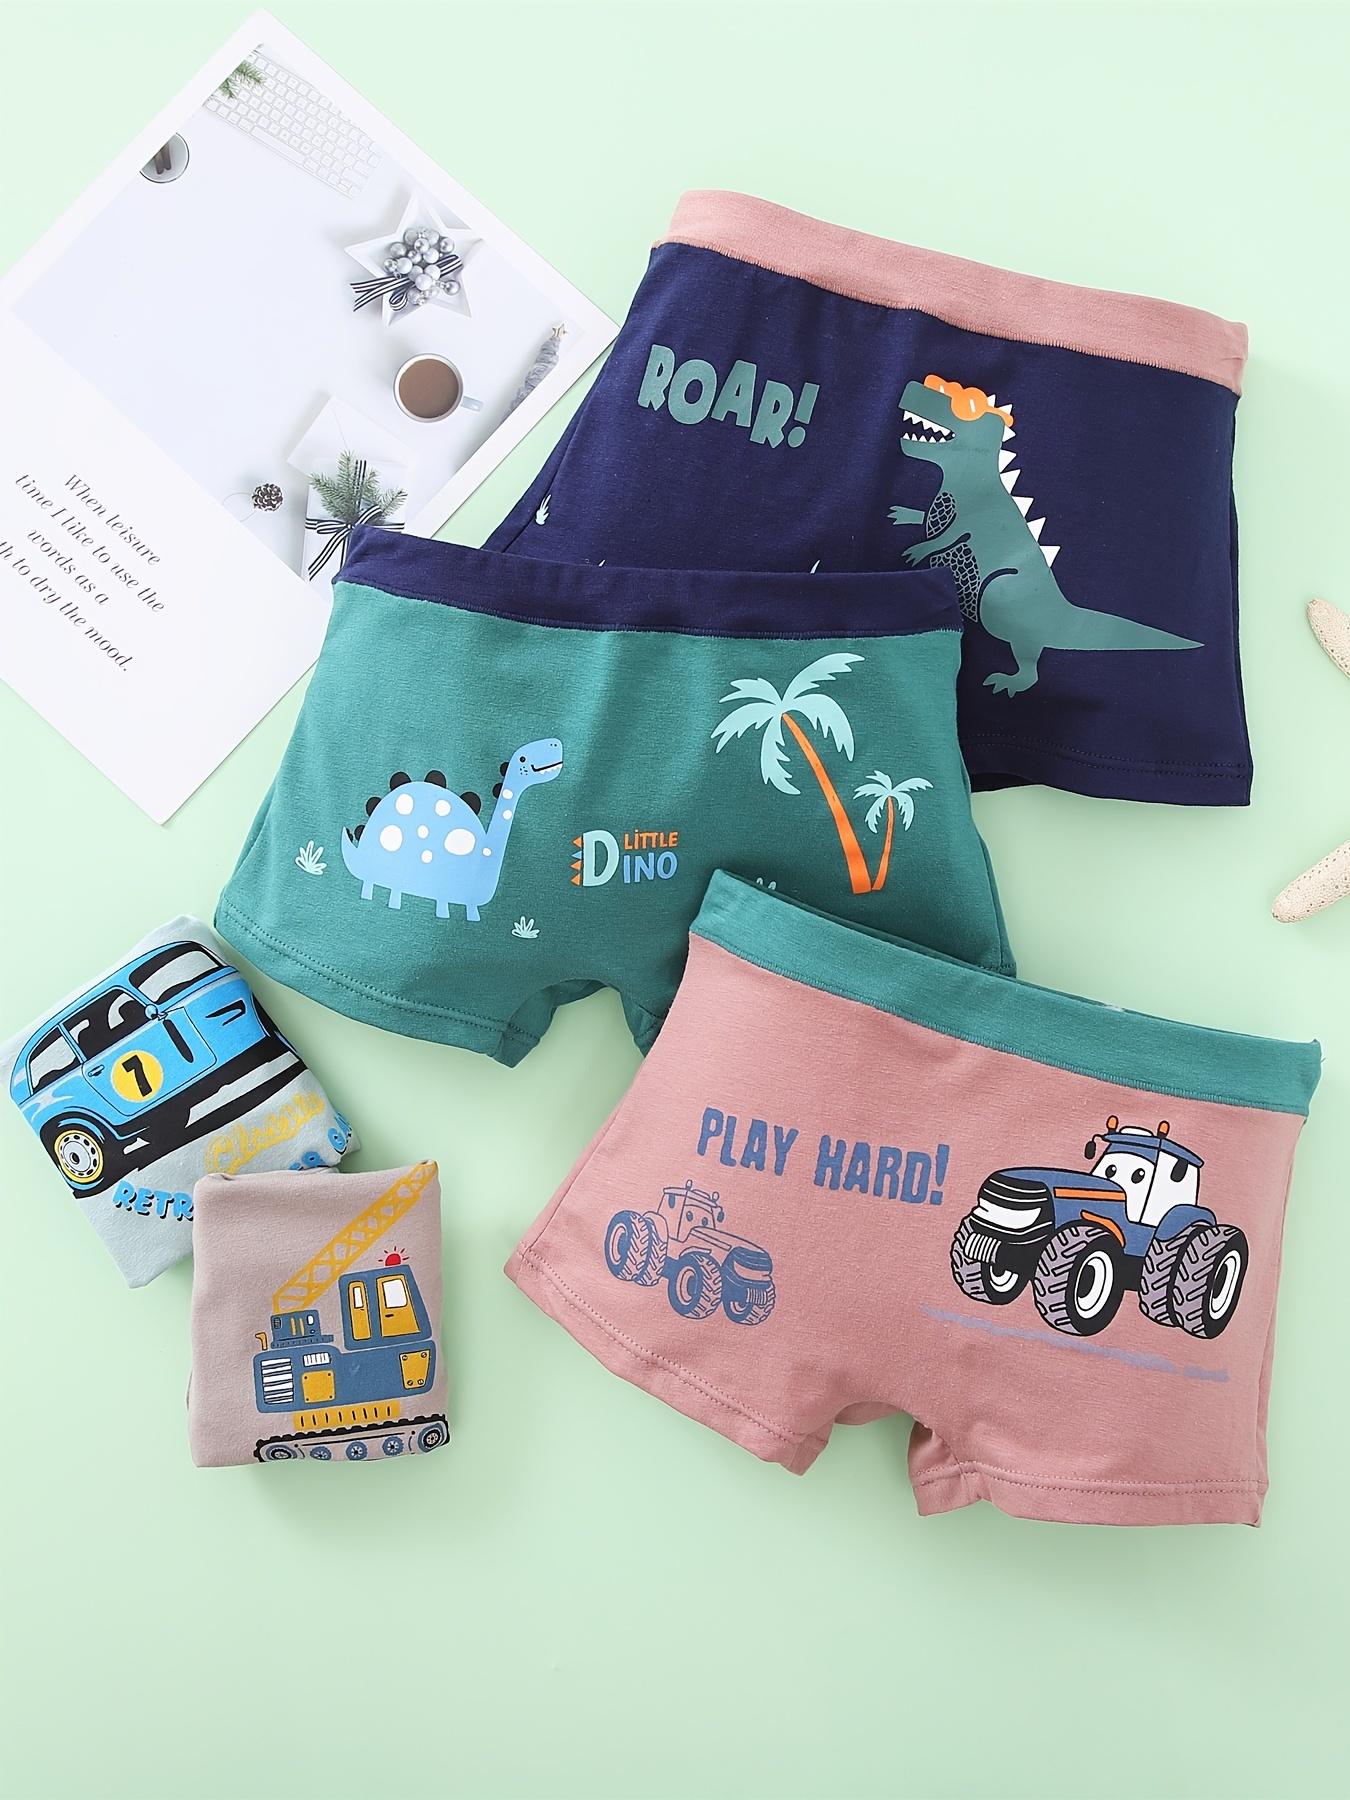 DISNEY PIXAR MULTI Character Boys Toddler 5-Pack Underwear Briefs